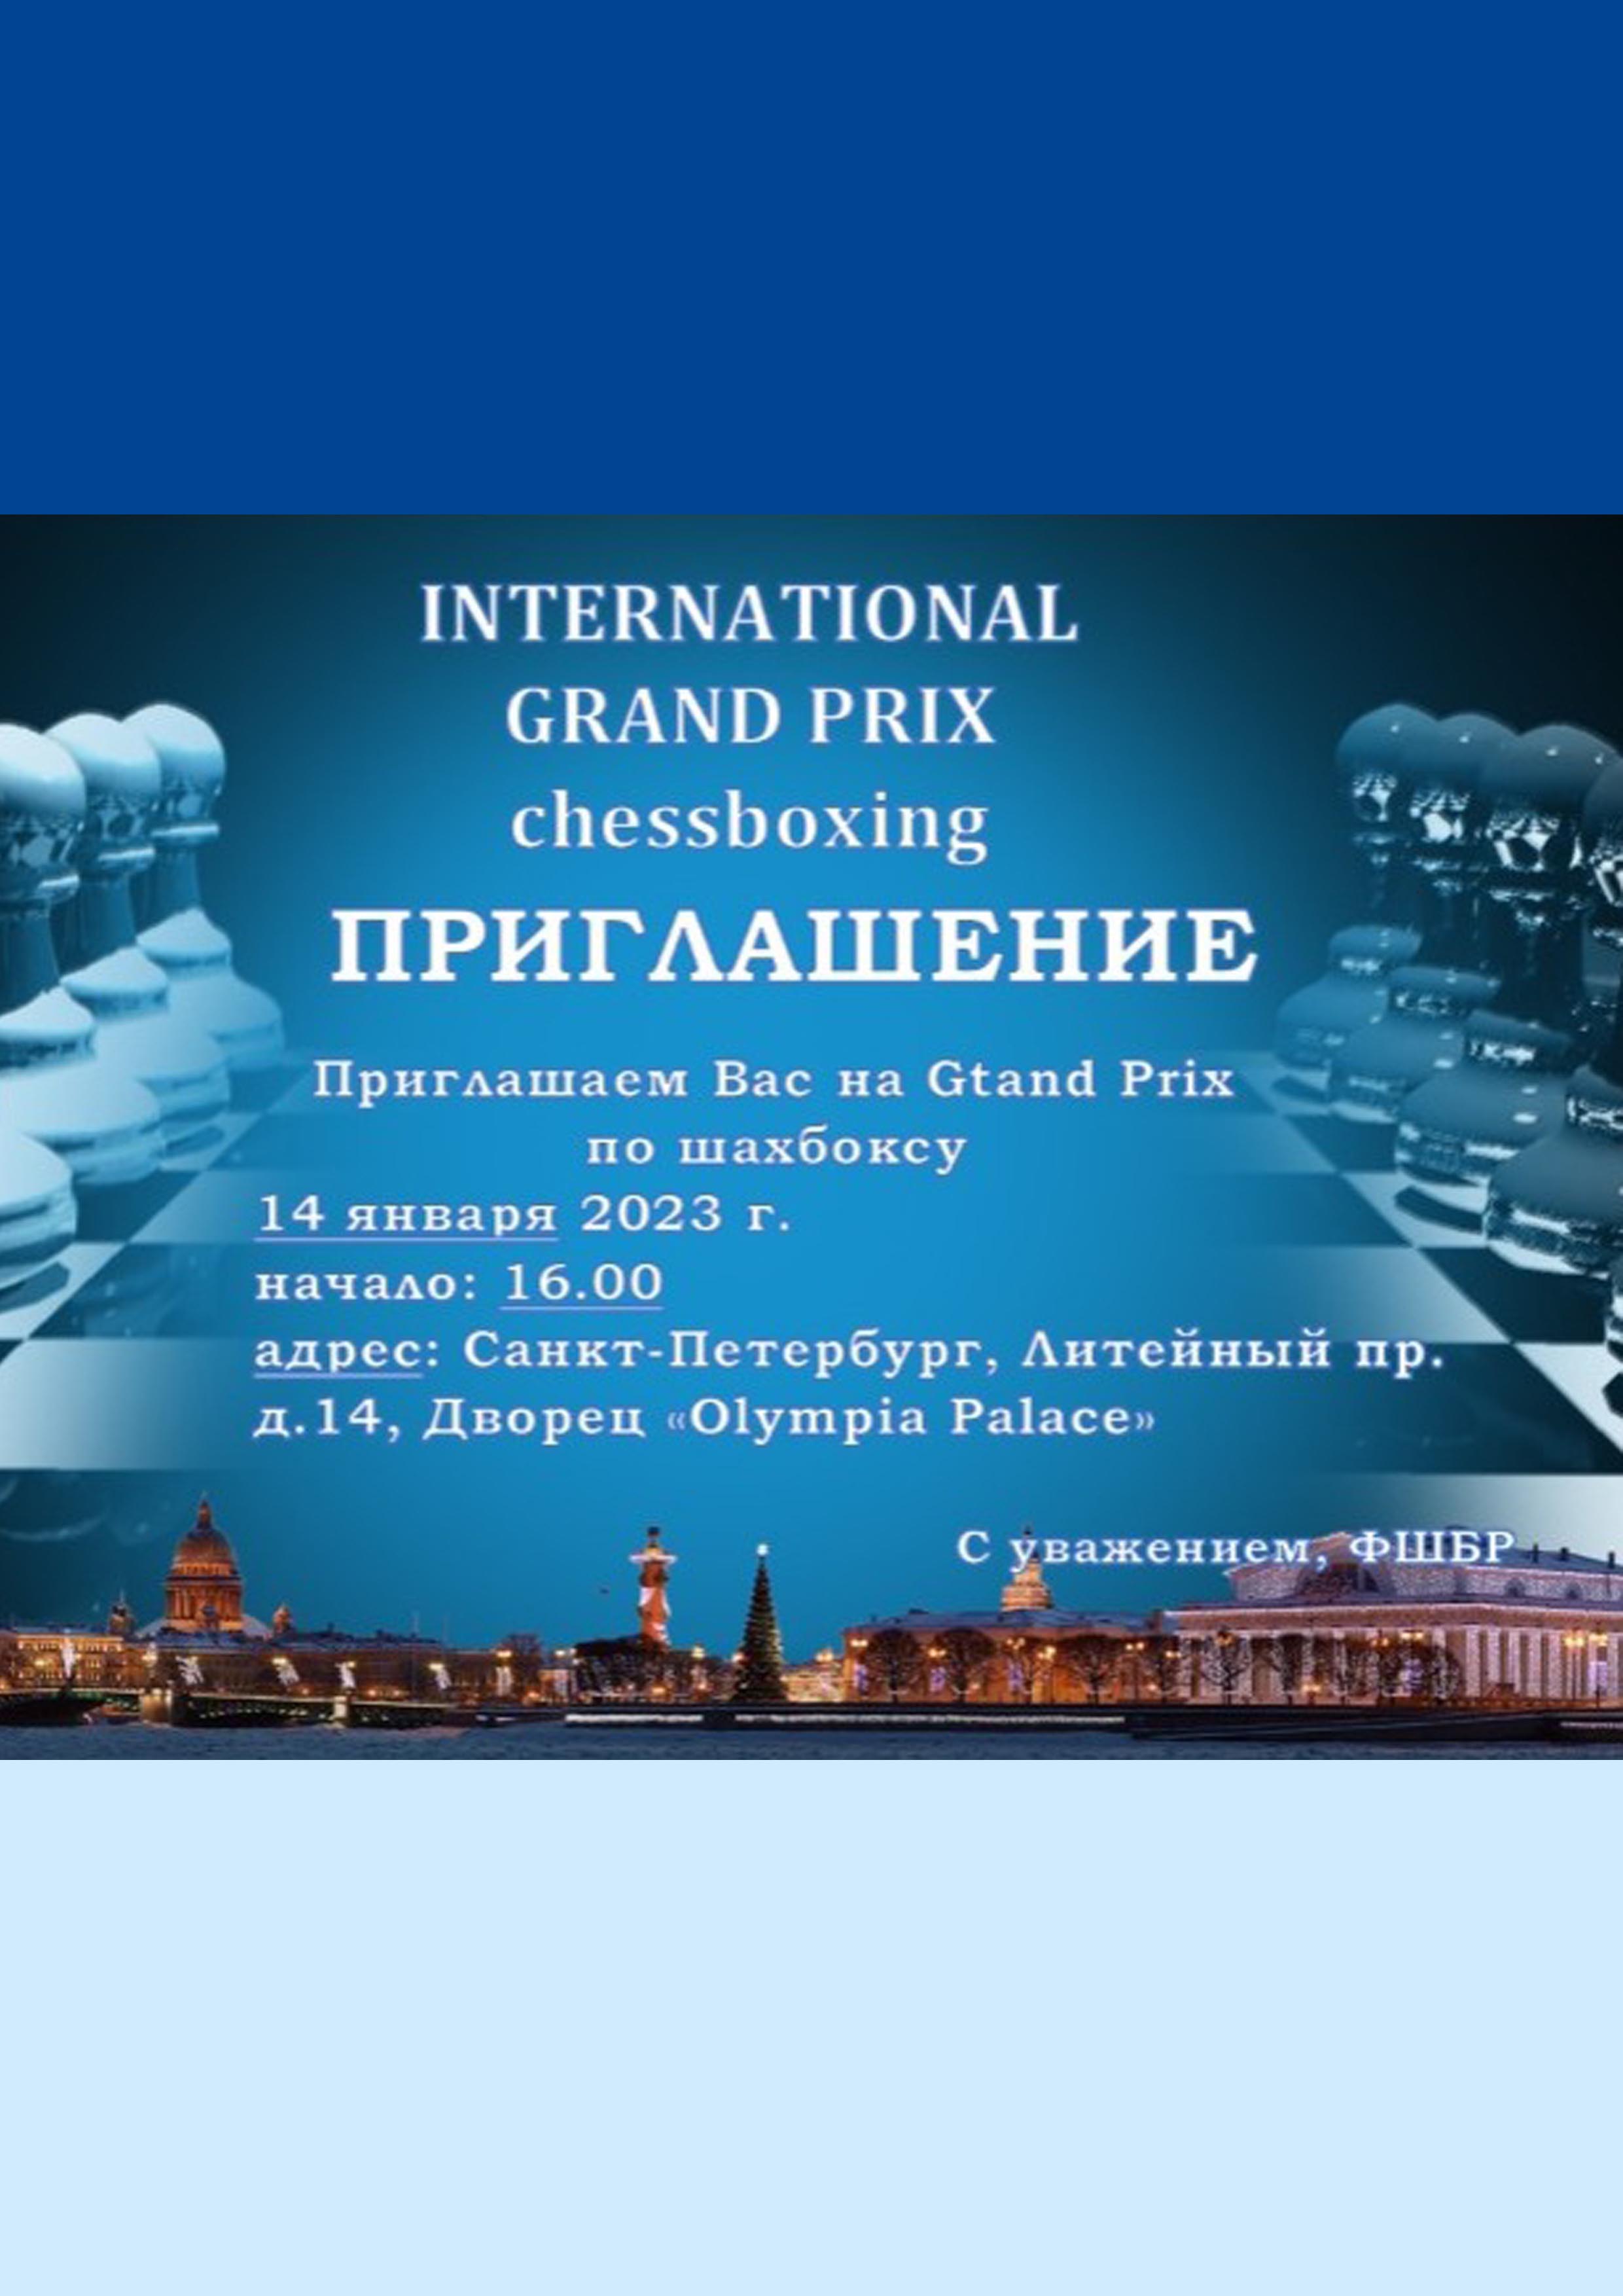 International GRAND PRIX CHESSBOXING 14  de enero
 2023  año
